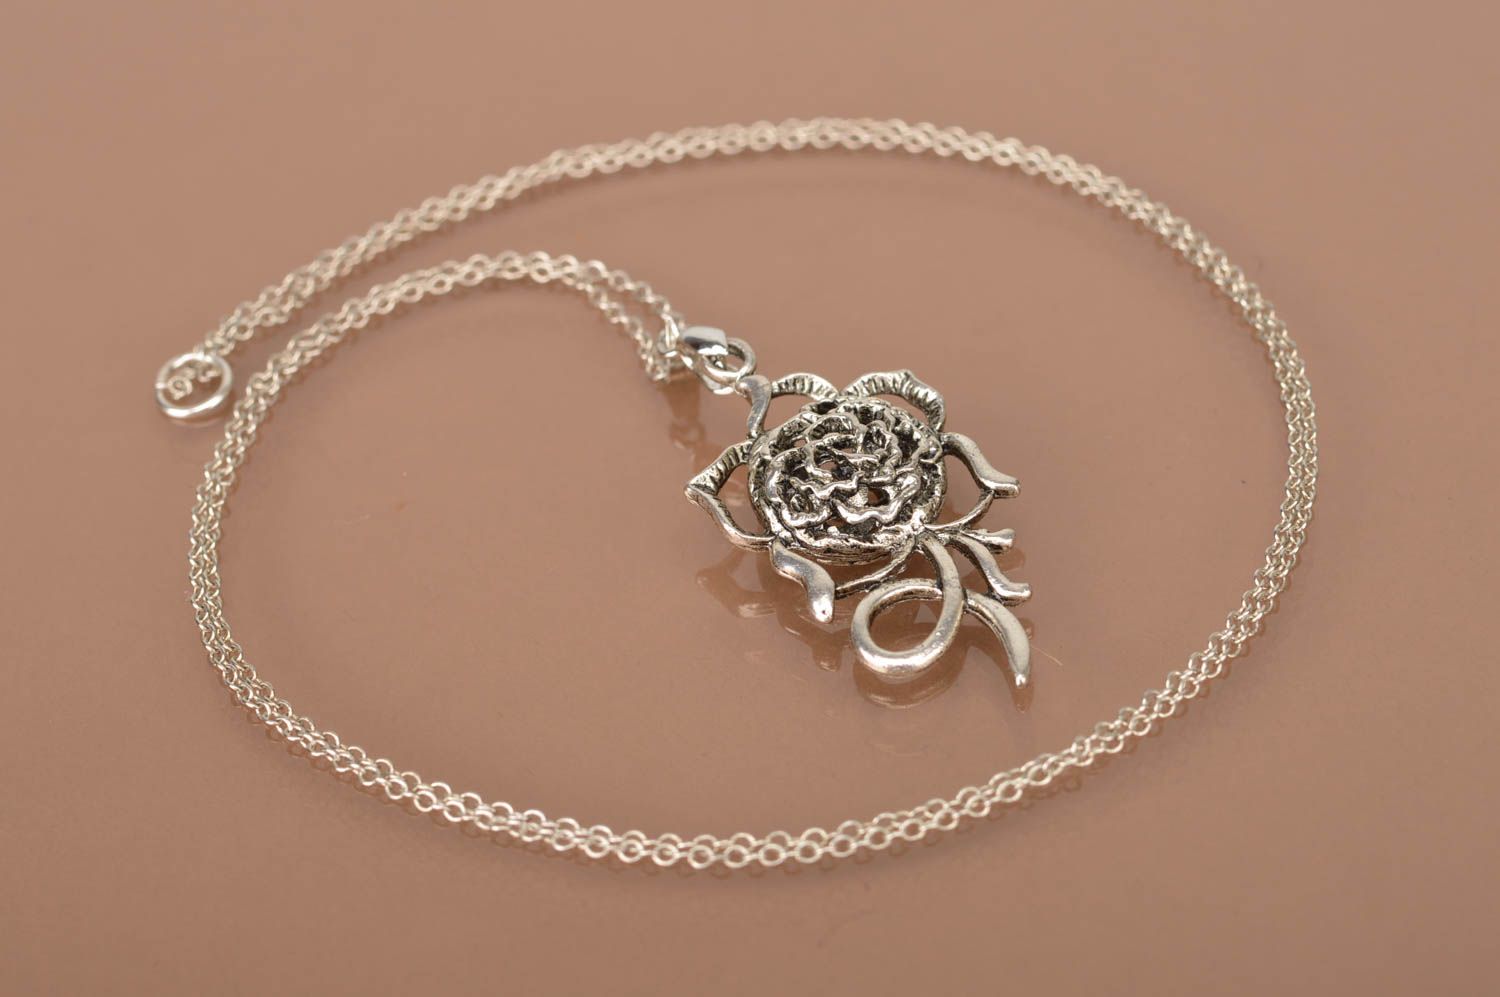 Unusual handmade metal neck pendant designer pendant for women gifts for her photo 4